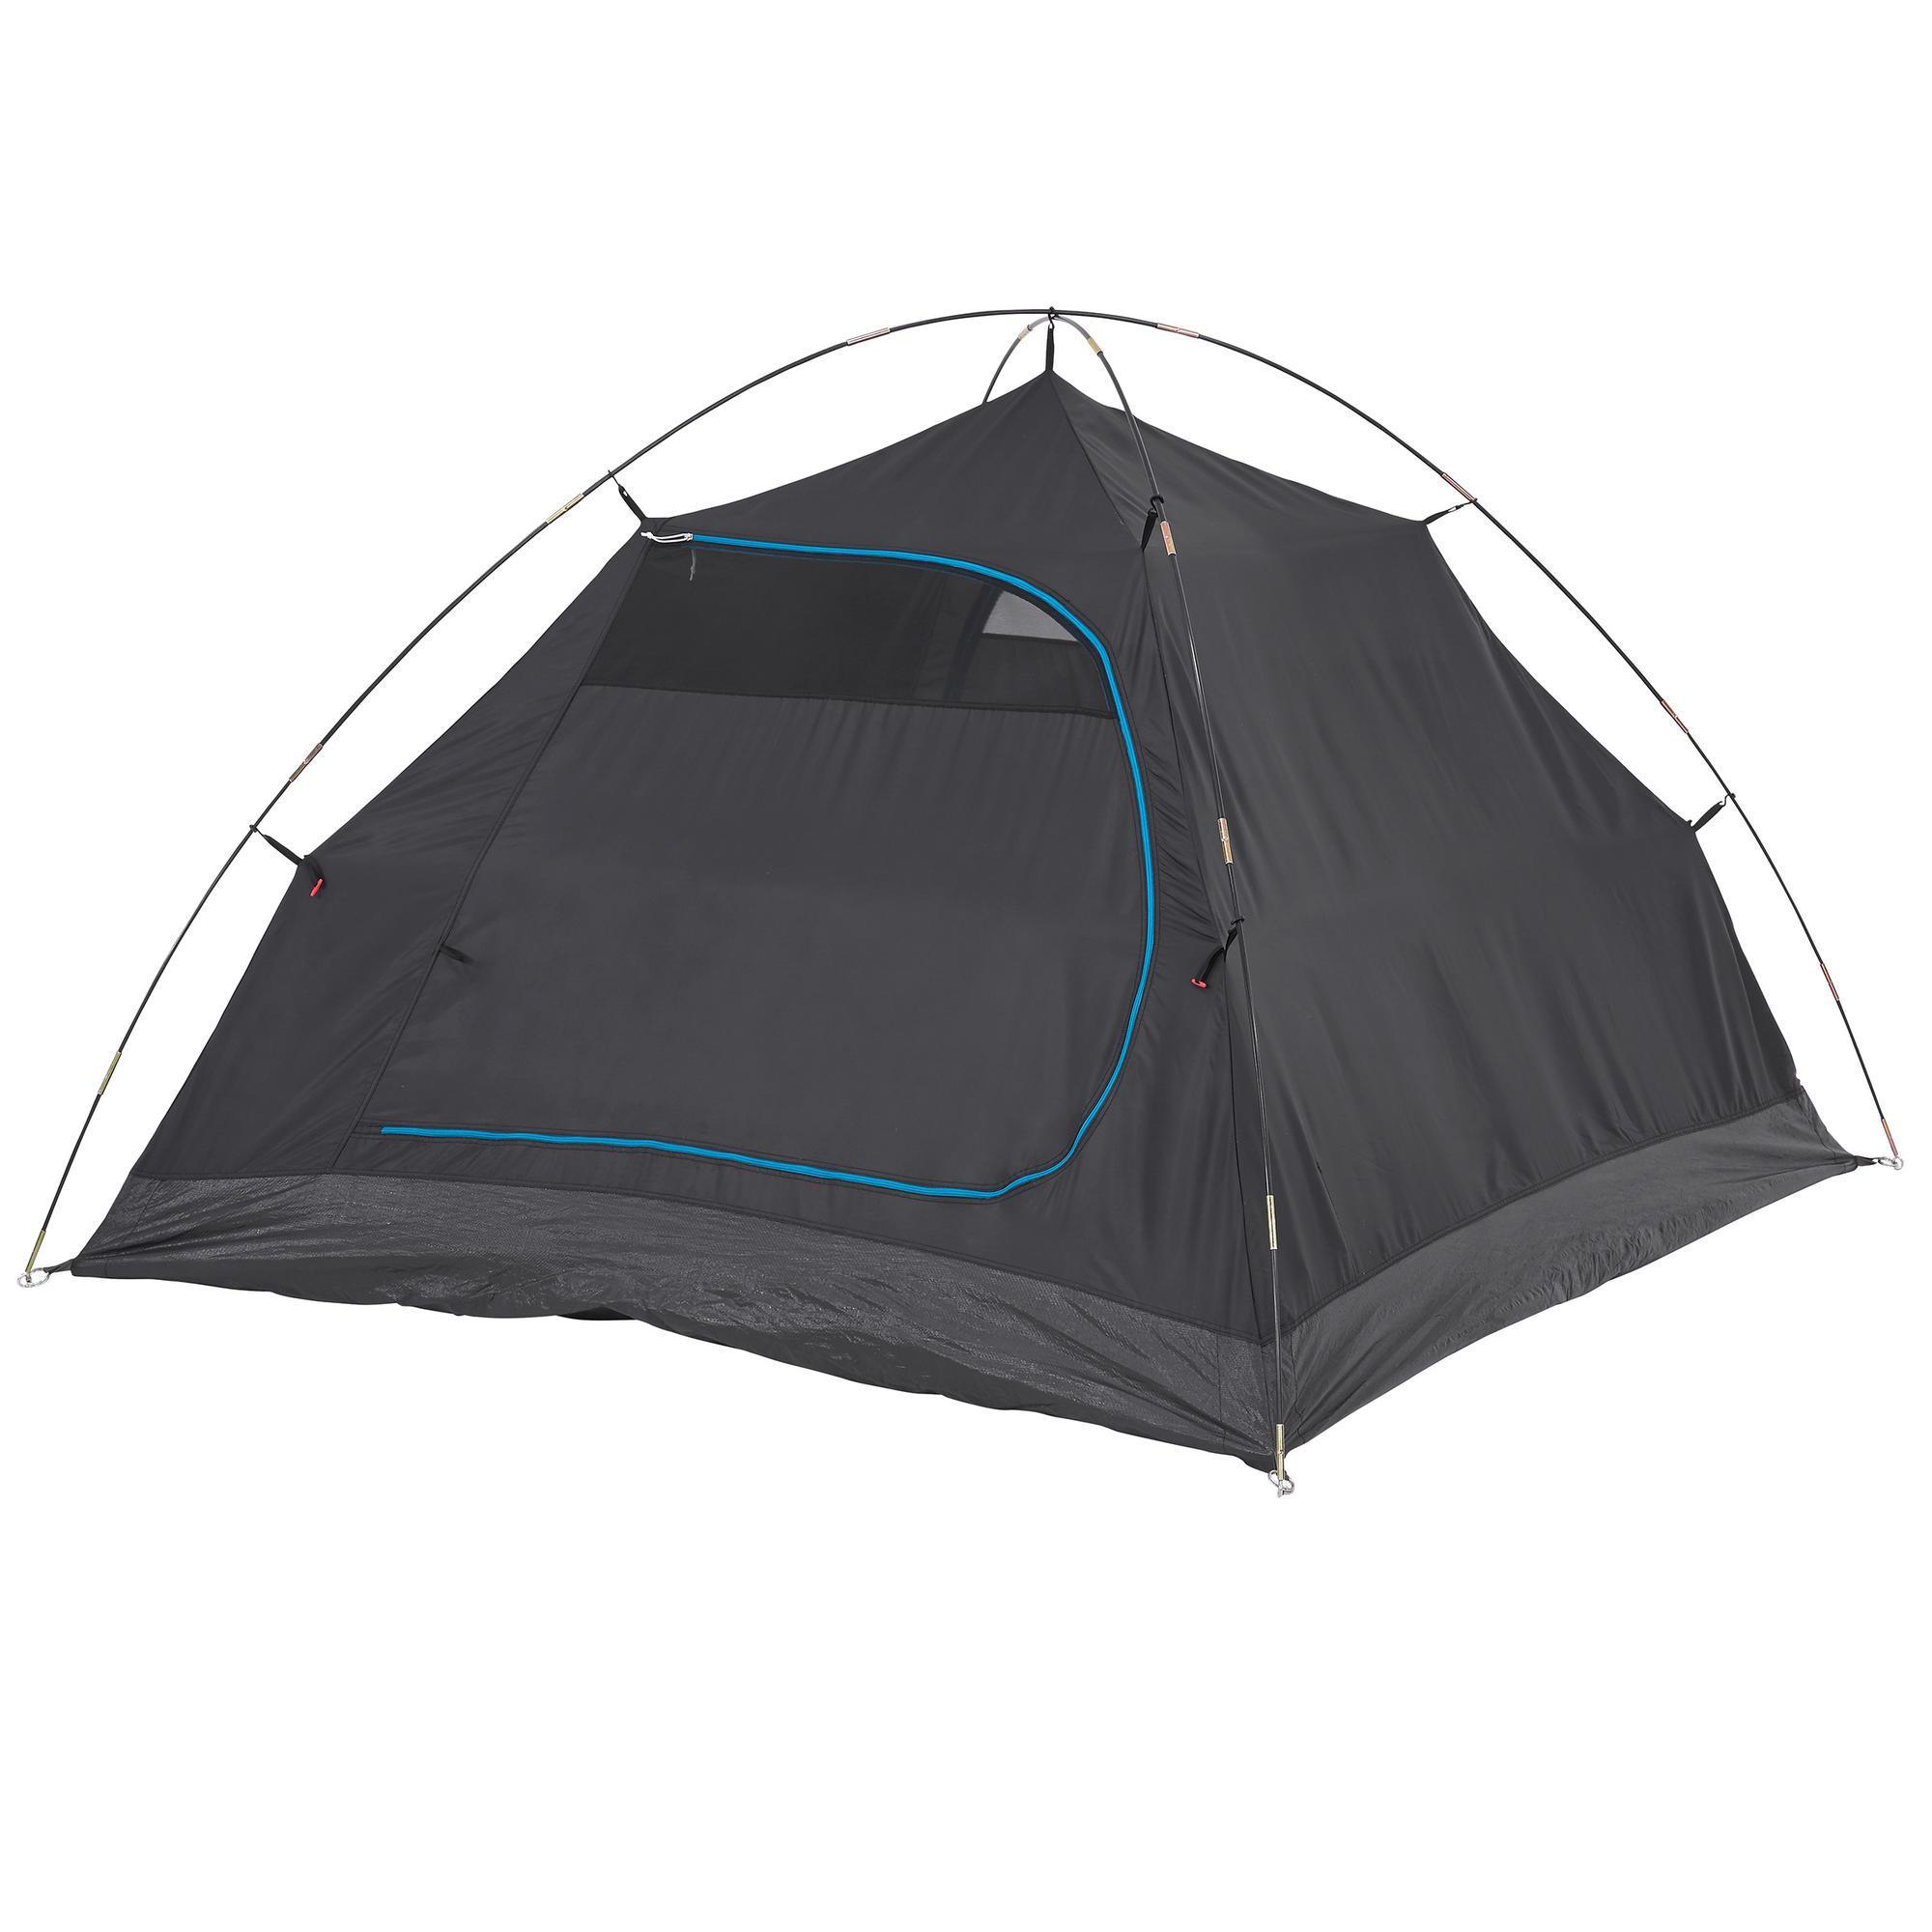 decathlon 3 man pop up tent